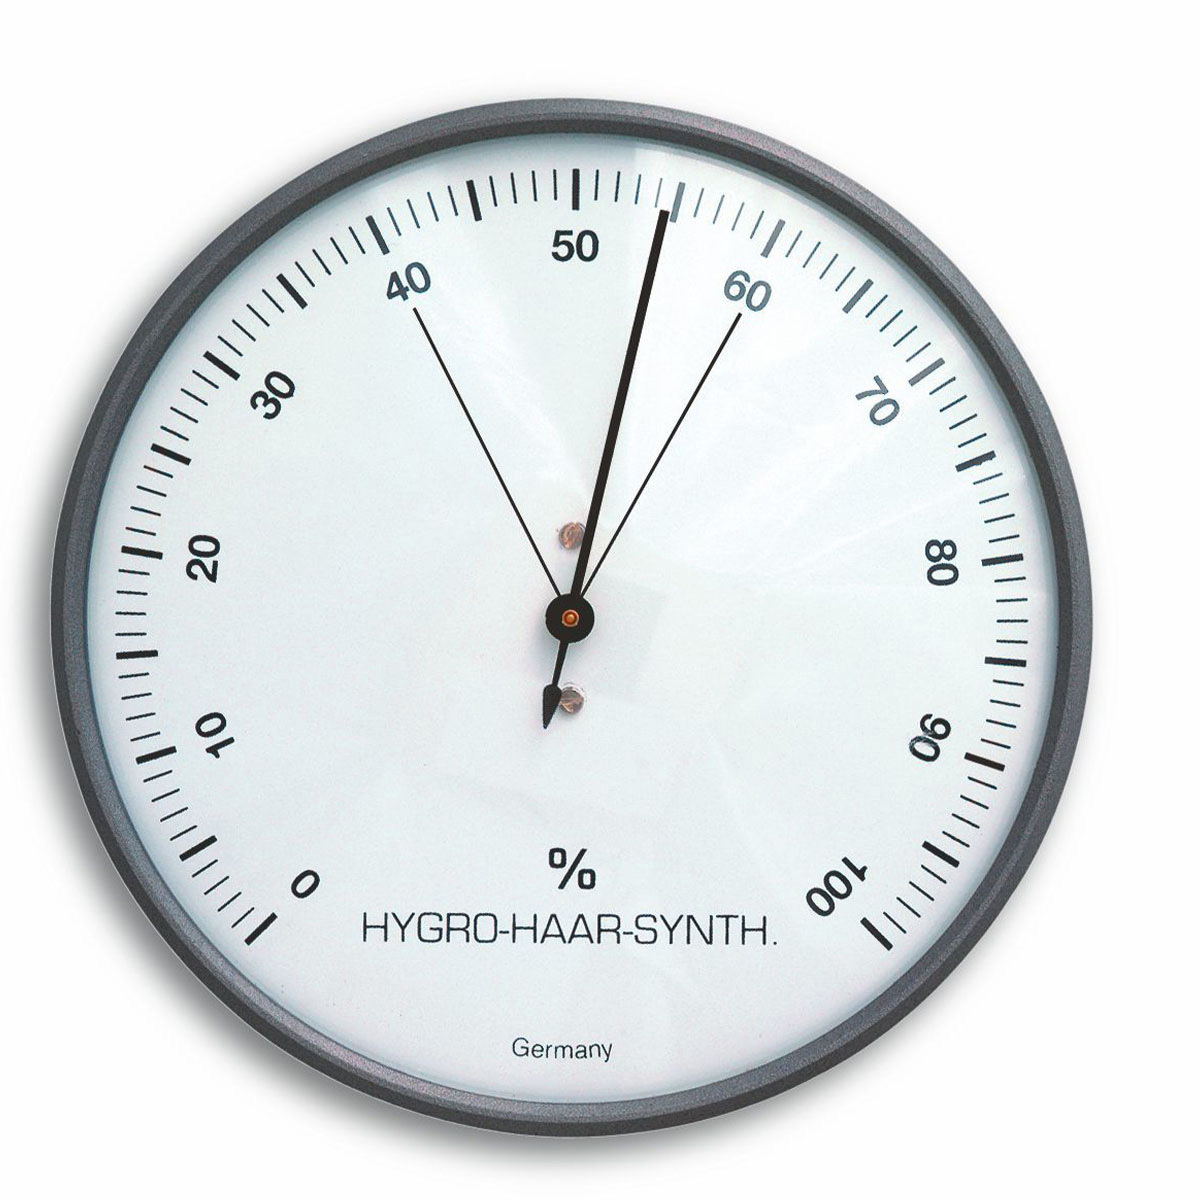 44-2003-analoges-hygrometer-1200x1200px.jpg